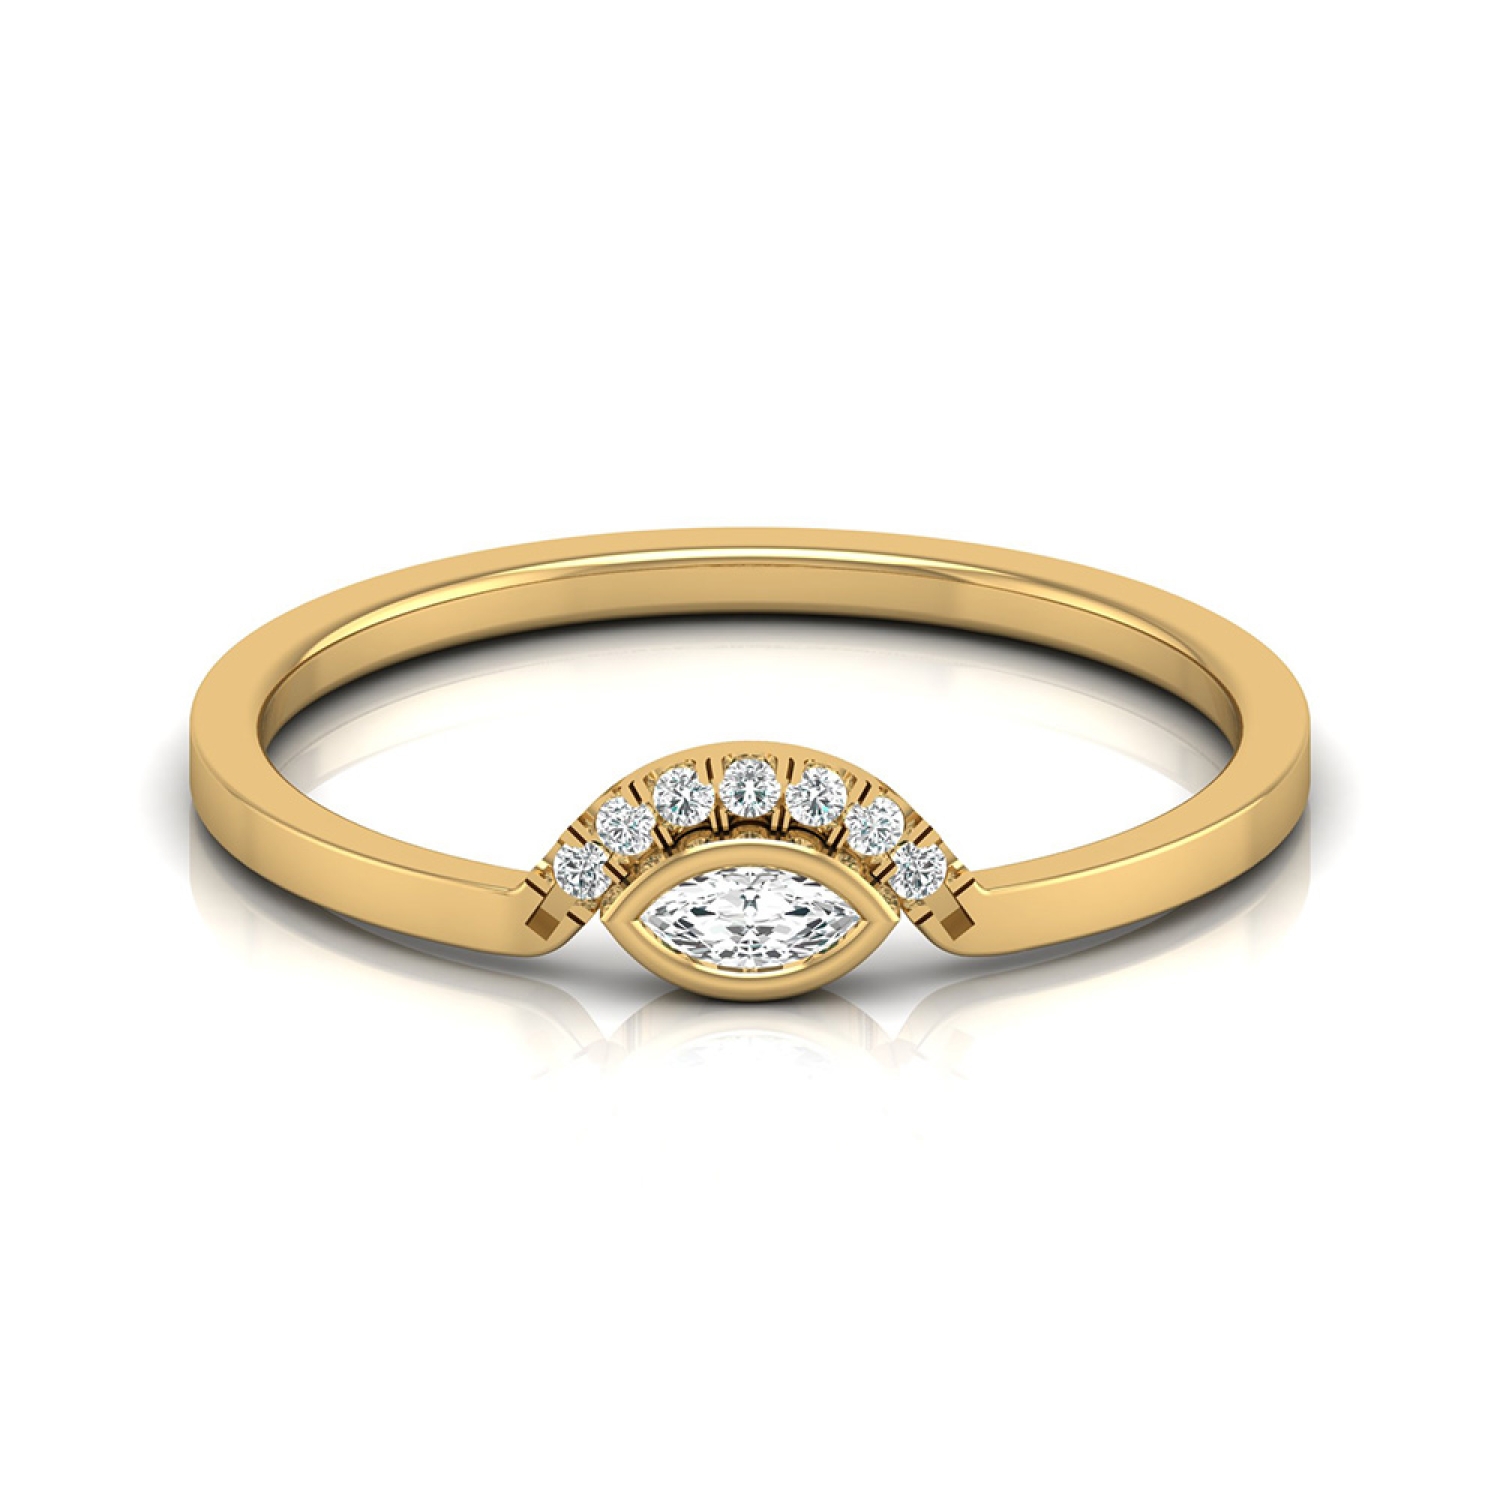 14K yellow gold oval diamond engagement ring - deJonghe Original Jewelry